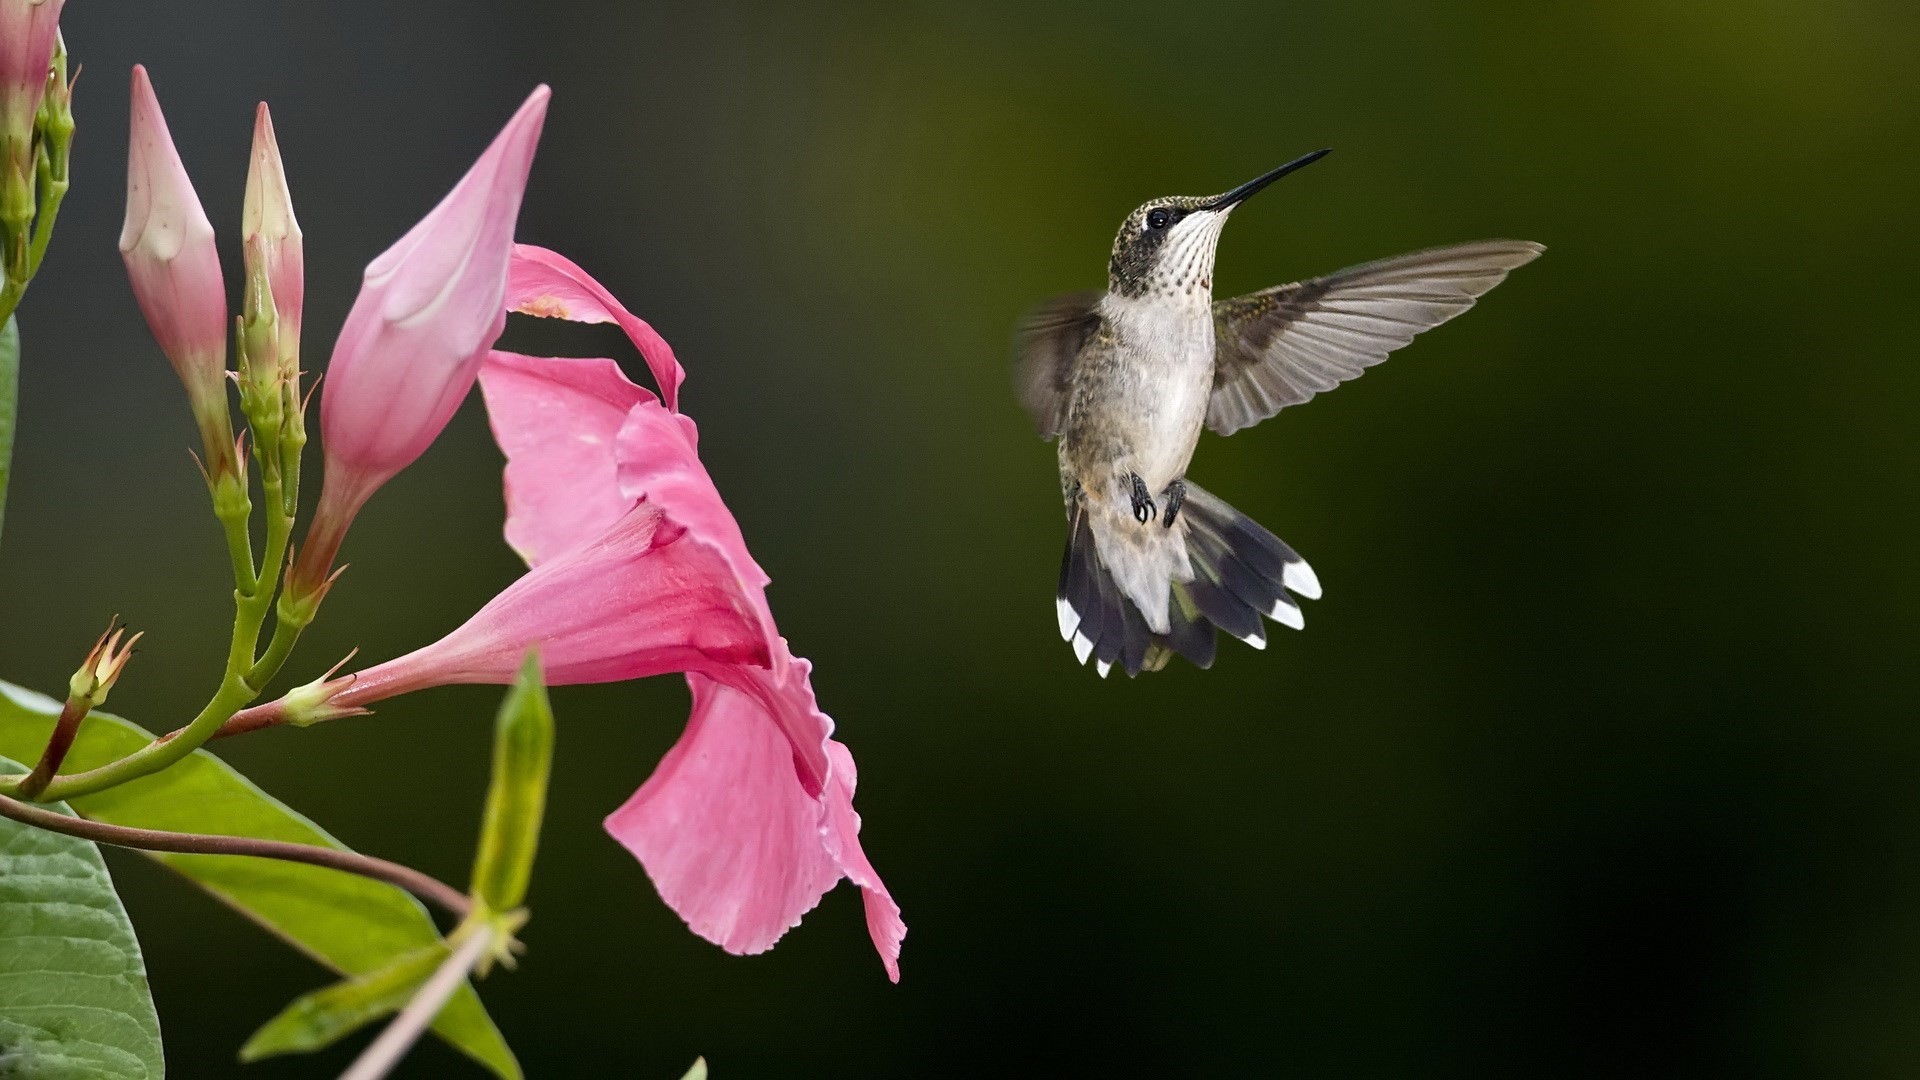 Hummingbird wallpaper photo hd